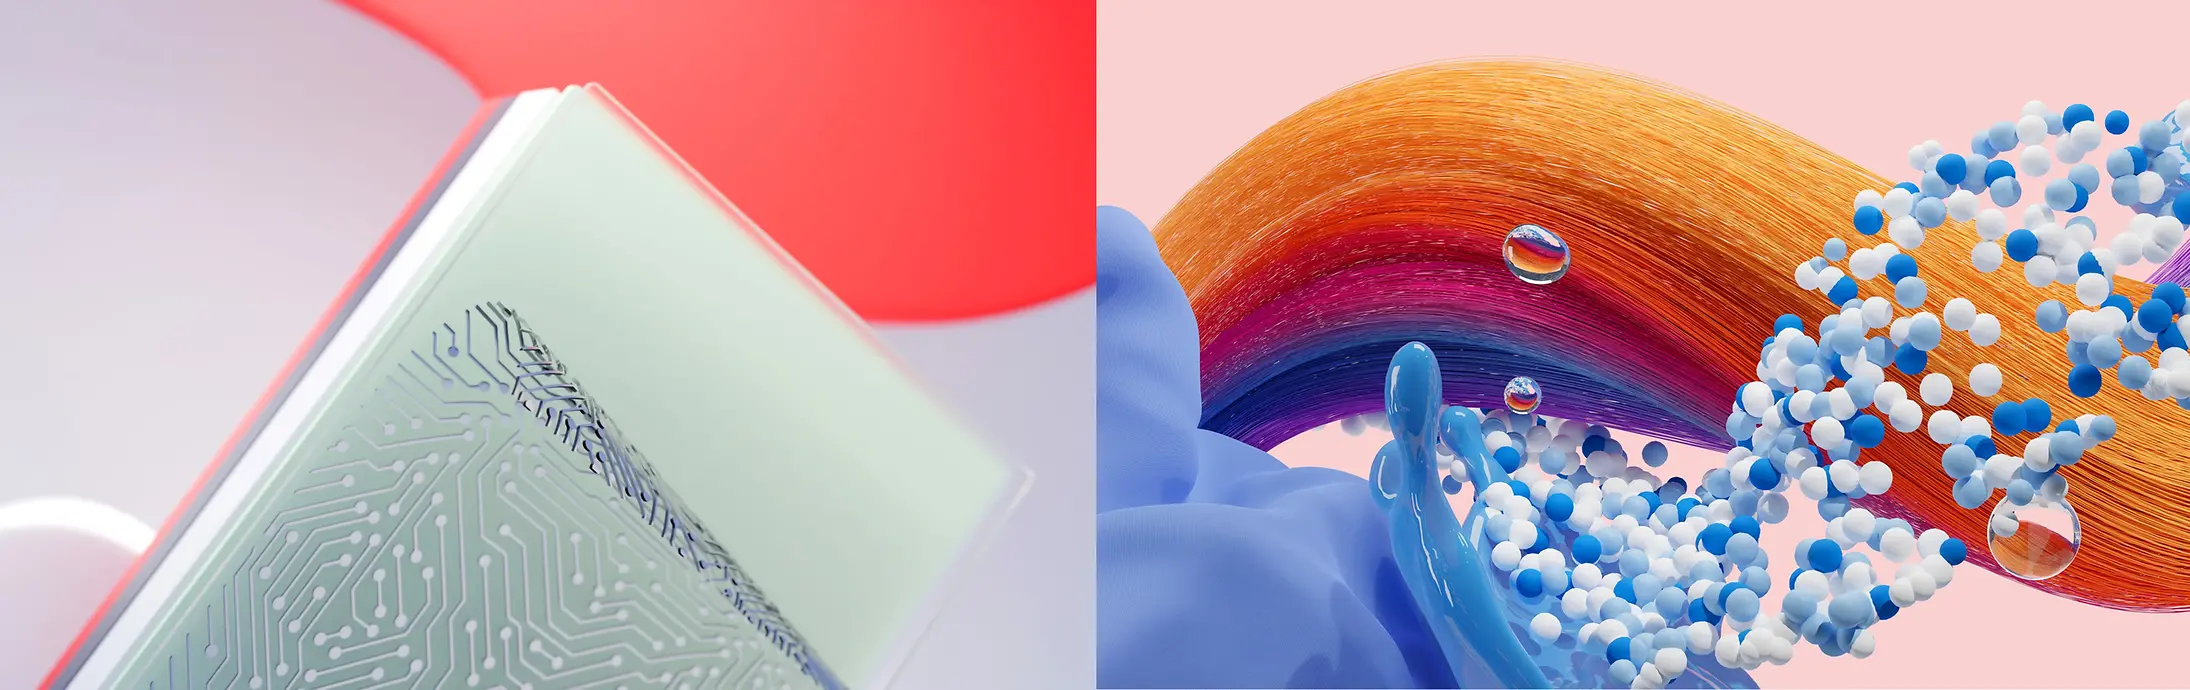 : Imagem abstrata que representa as unidades de negócio da Henkel: Adhesive Technologies, Hair e Laundry & Home Care.